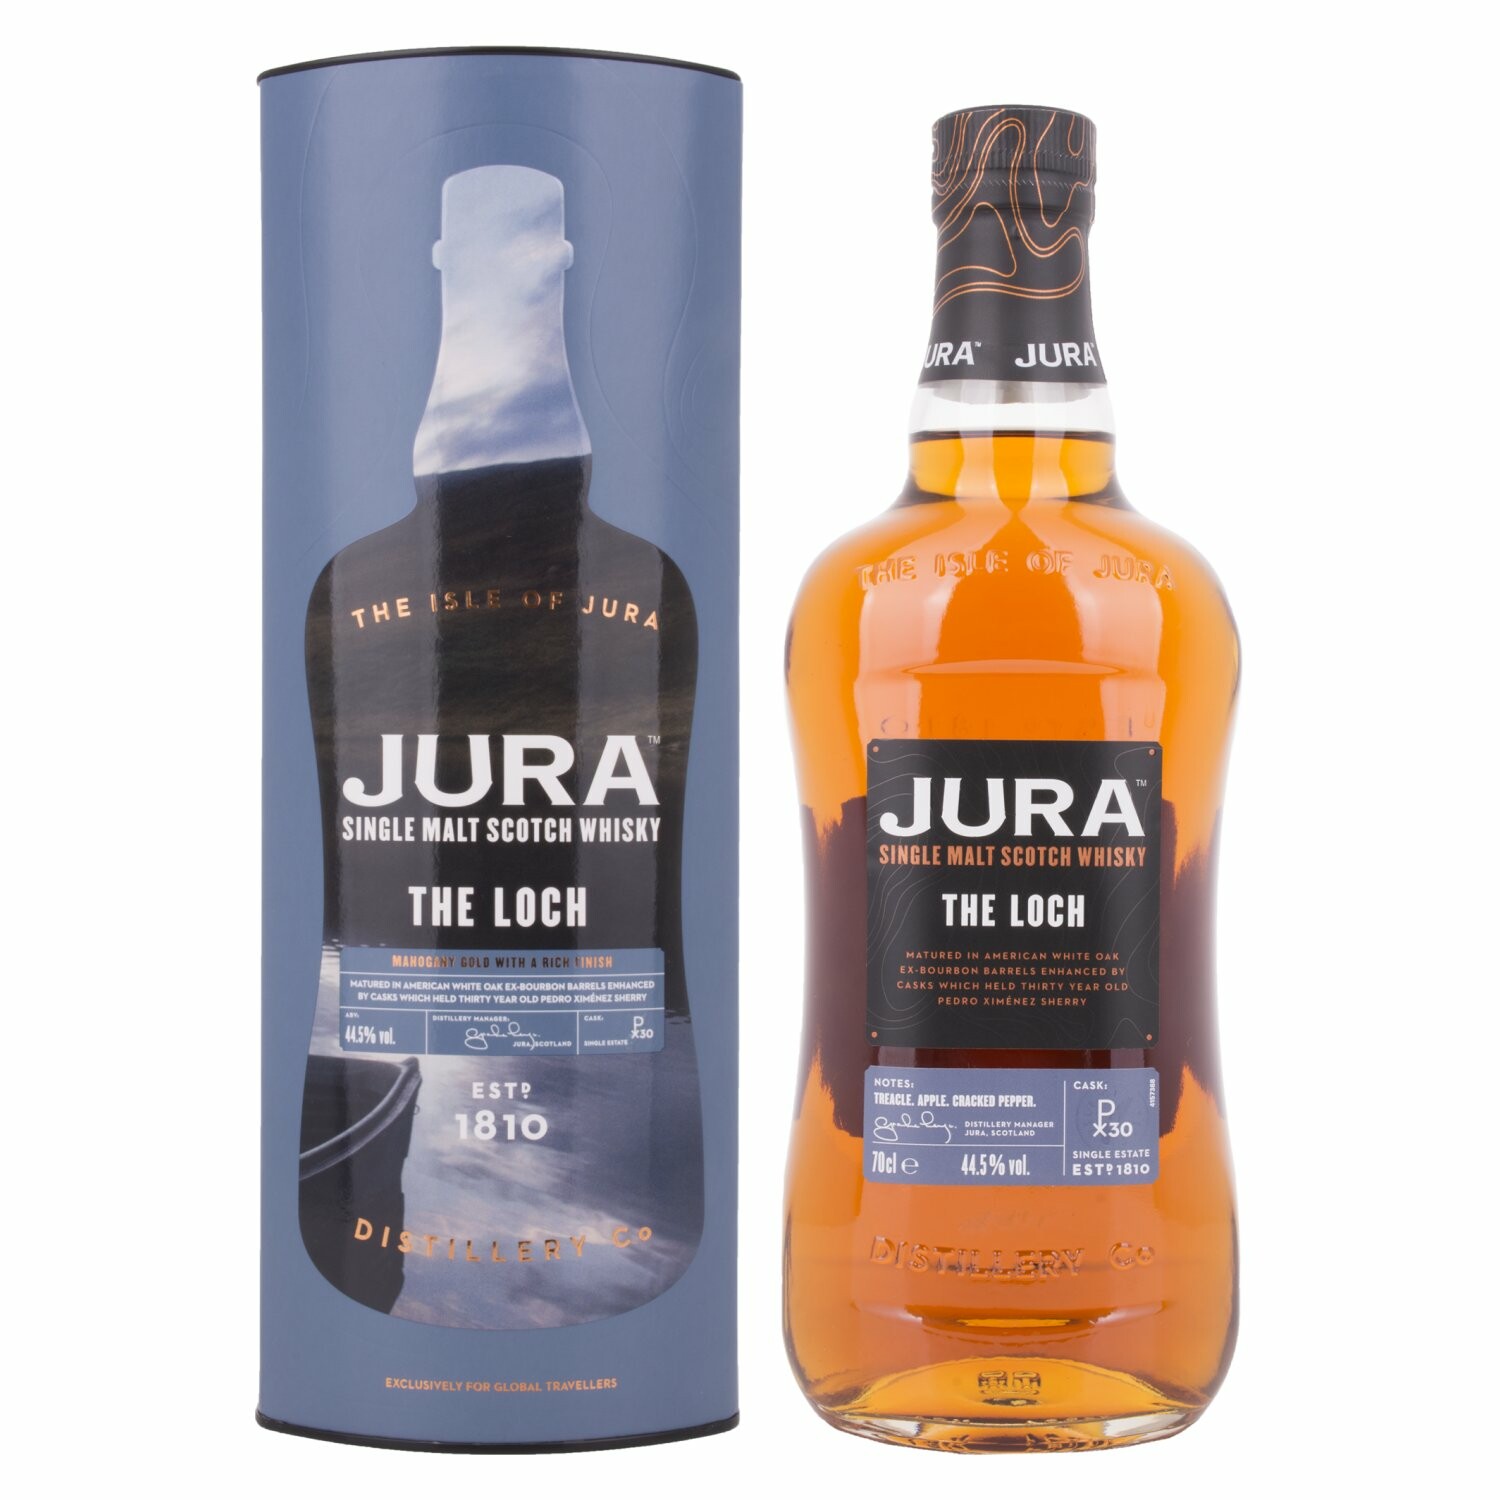 Jura THE LOCH Single Malt Scotch Whisky 44,5% Vol. 0,7l in Giftbox